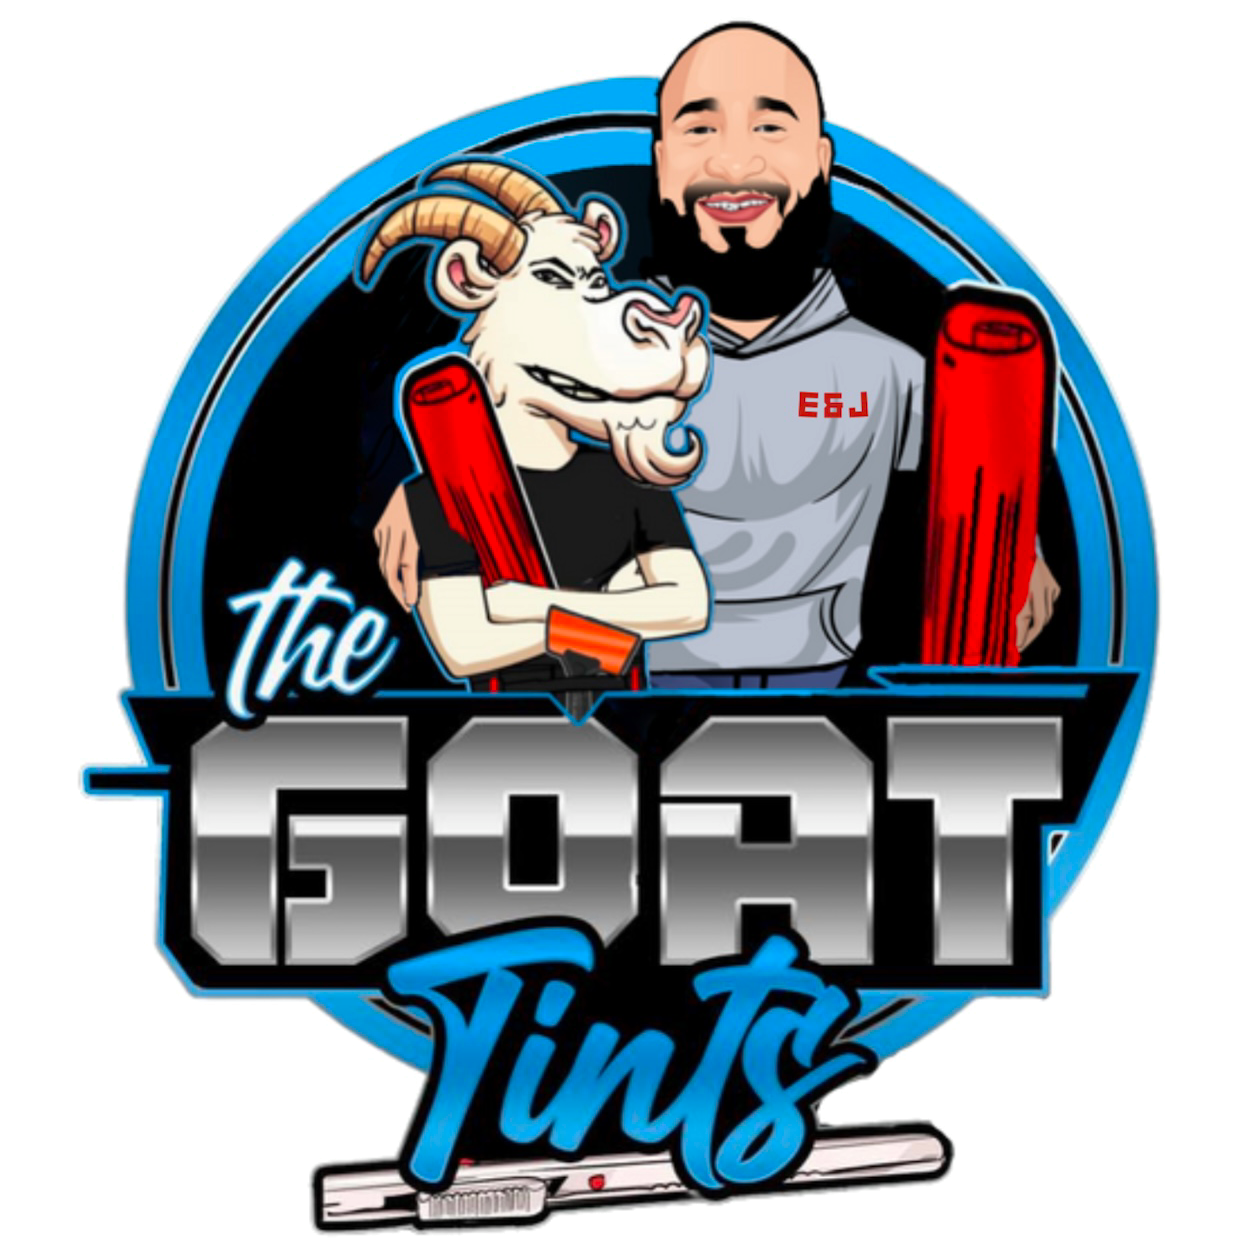 The Goat Tints